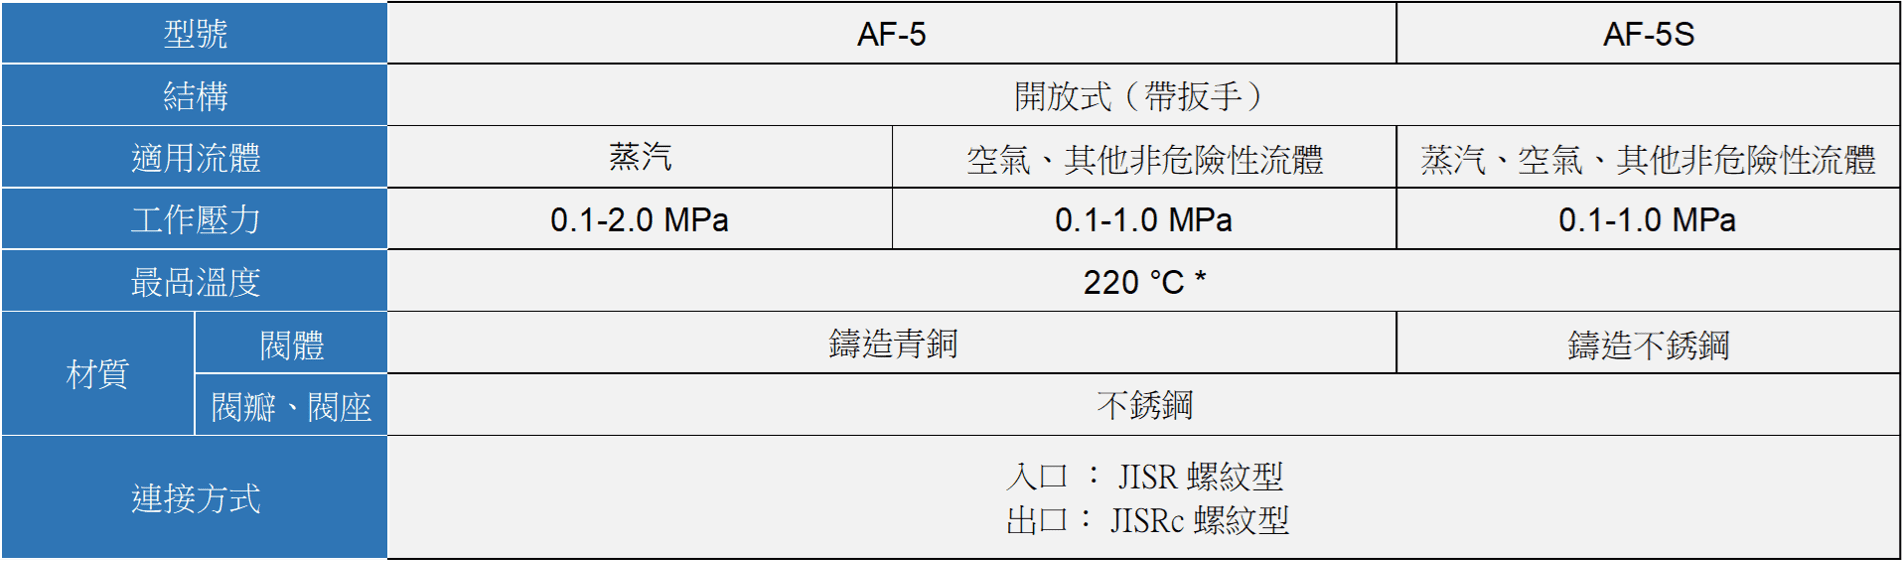 YOSHITAKE -全量(全啟)式安全閥規格 - AF-5/ 5S 系列